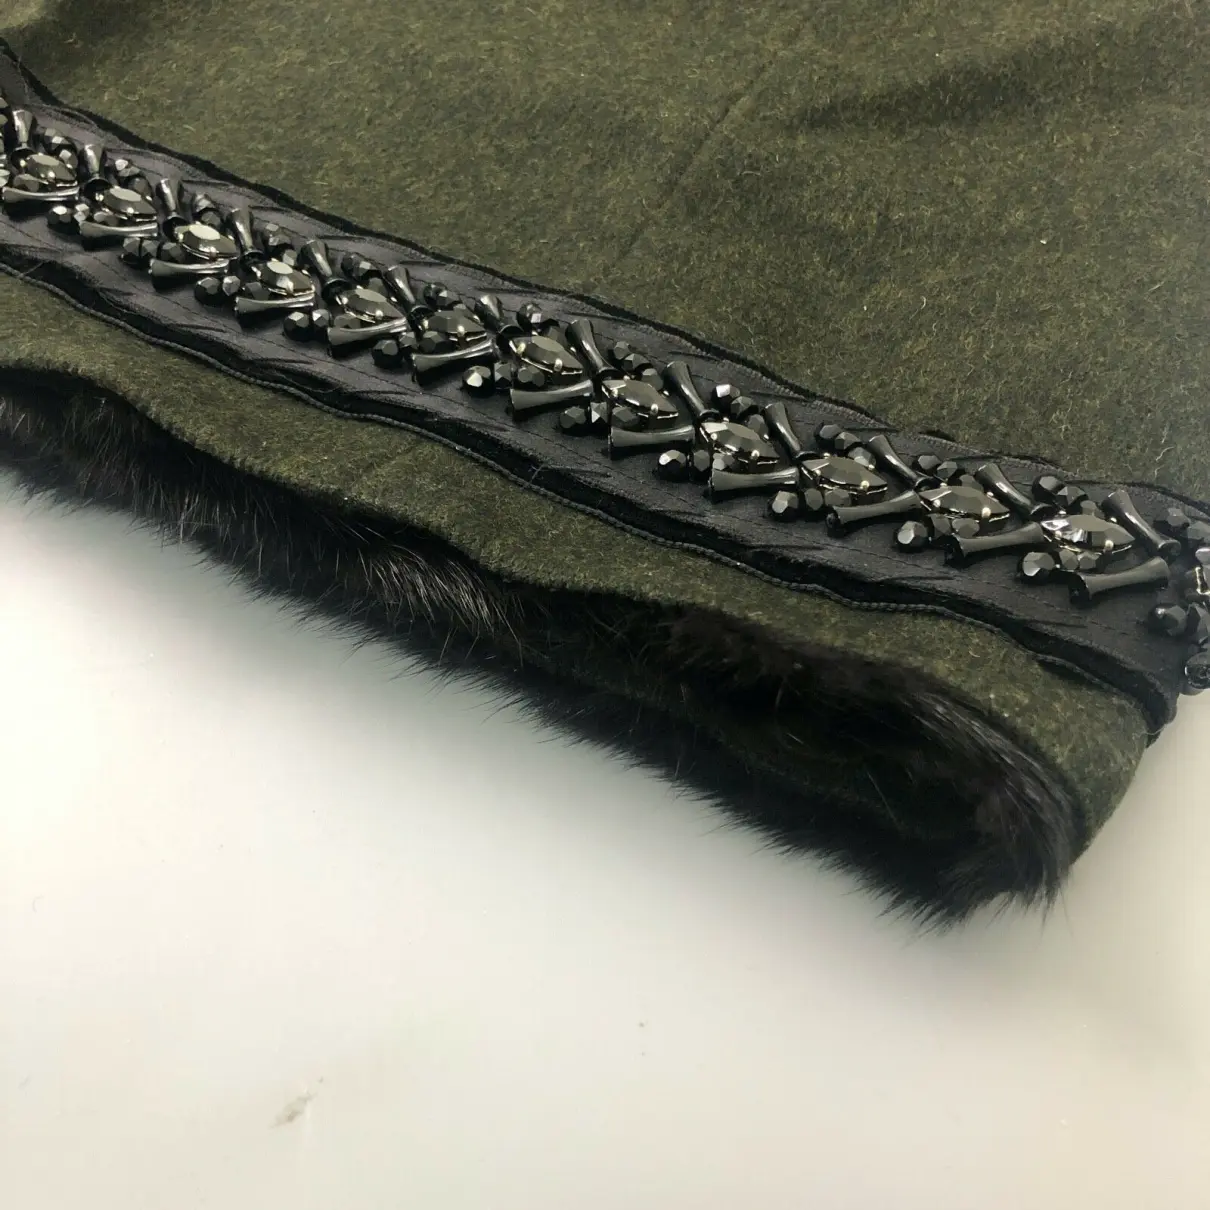 Wool mid-length skirt Prada